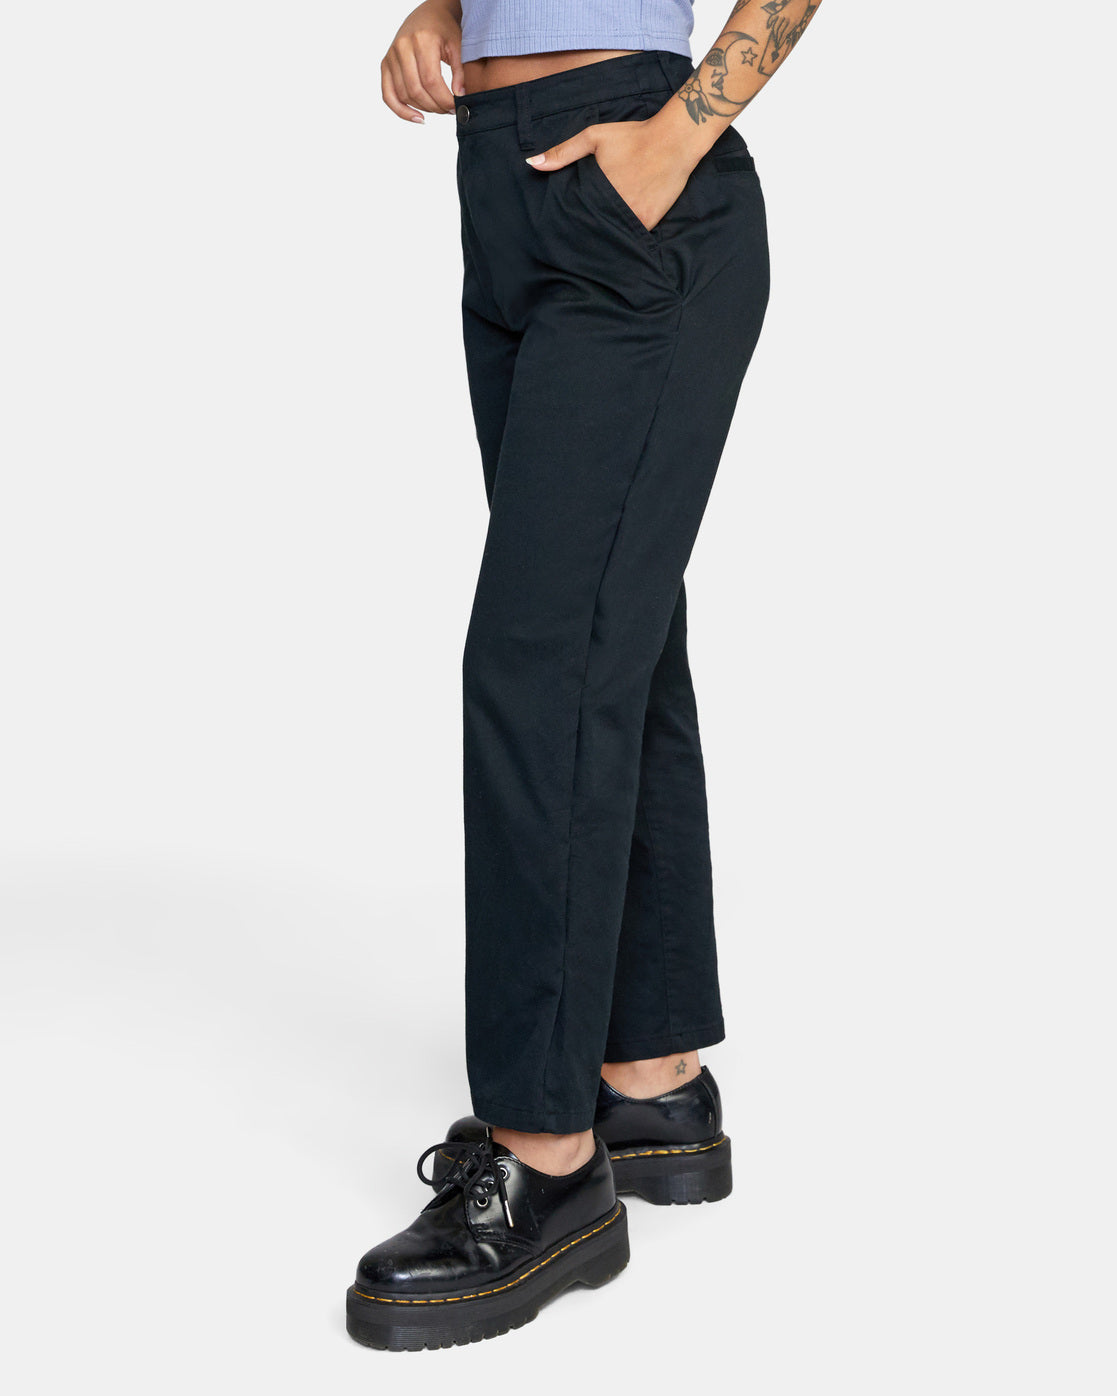 UUE Dress Pants for Women Office Casual Pull-On Women's Work Pants with  Pockets Slacks Skinny Leg 27